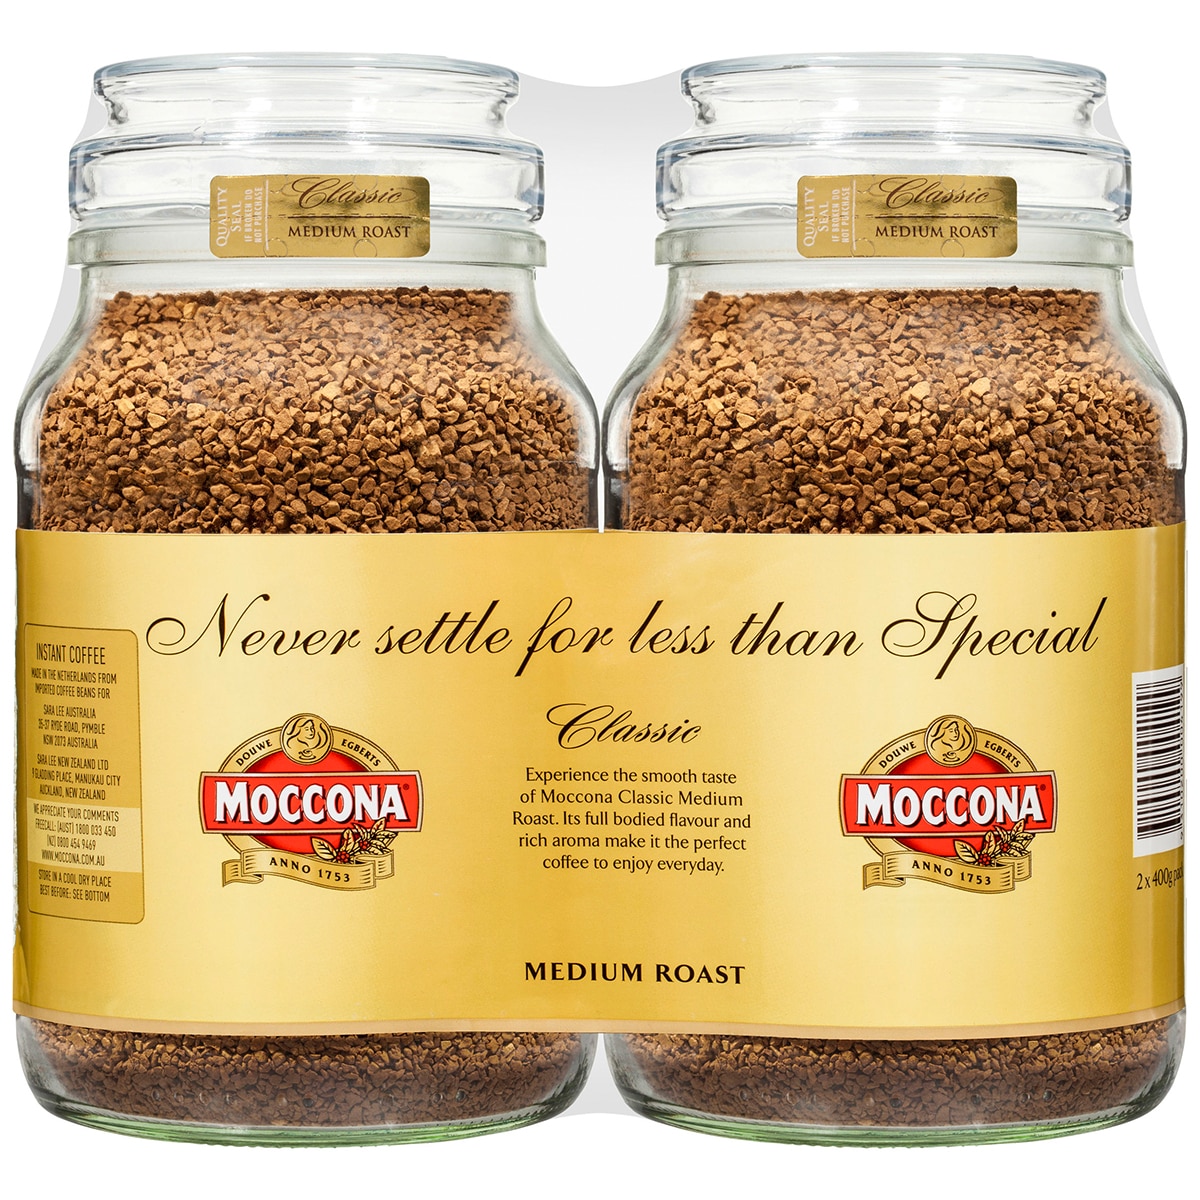 Moccona Classic Medium Roast Coffee 2 x 400g